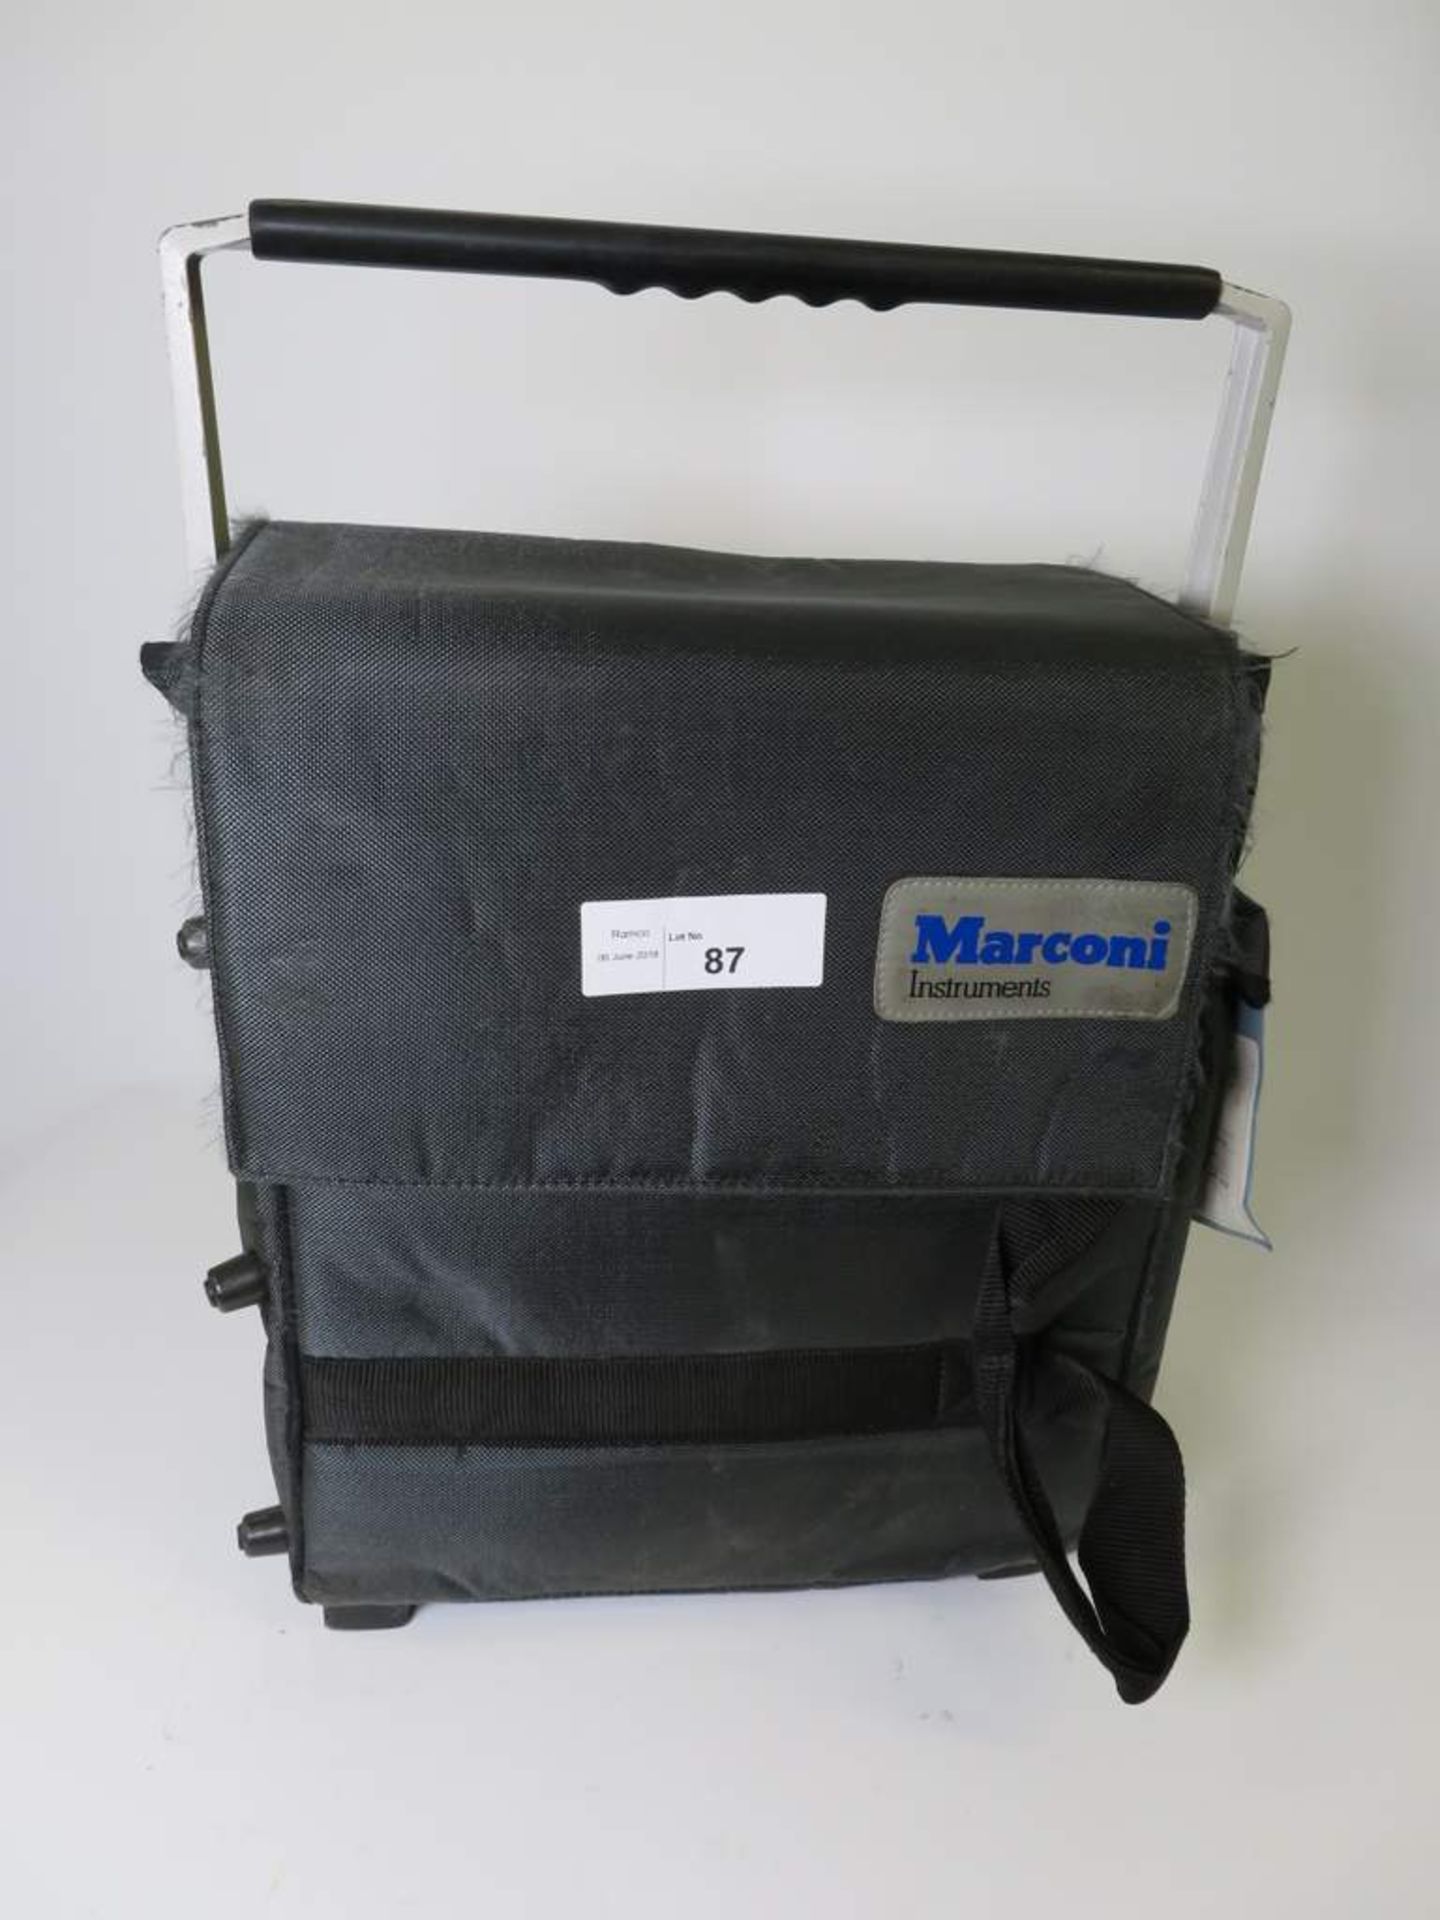 Aeroflex Marconi 2945 Communications Test Set - Image 3 of 3